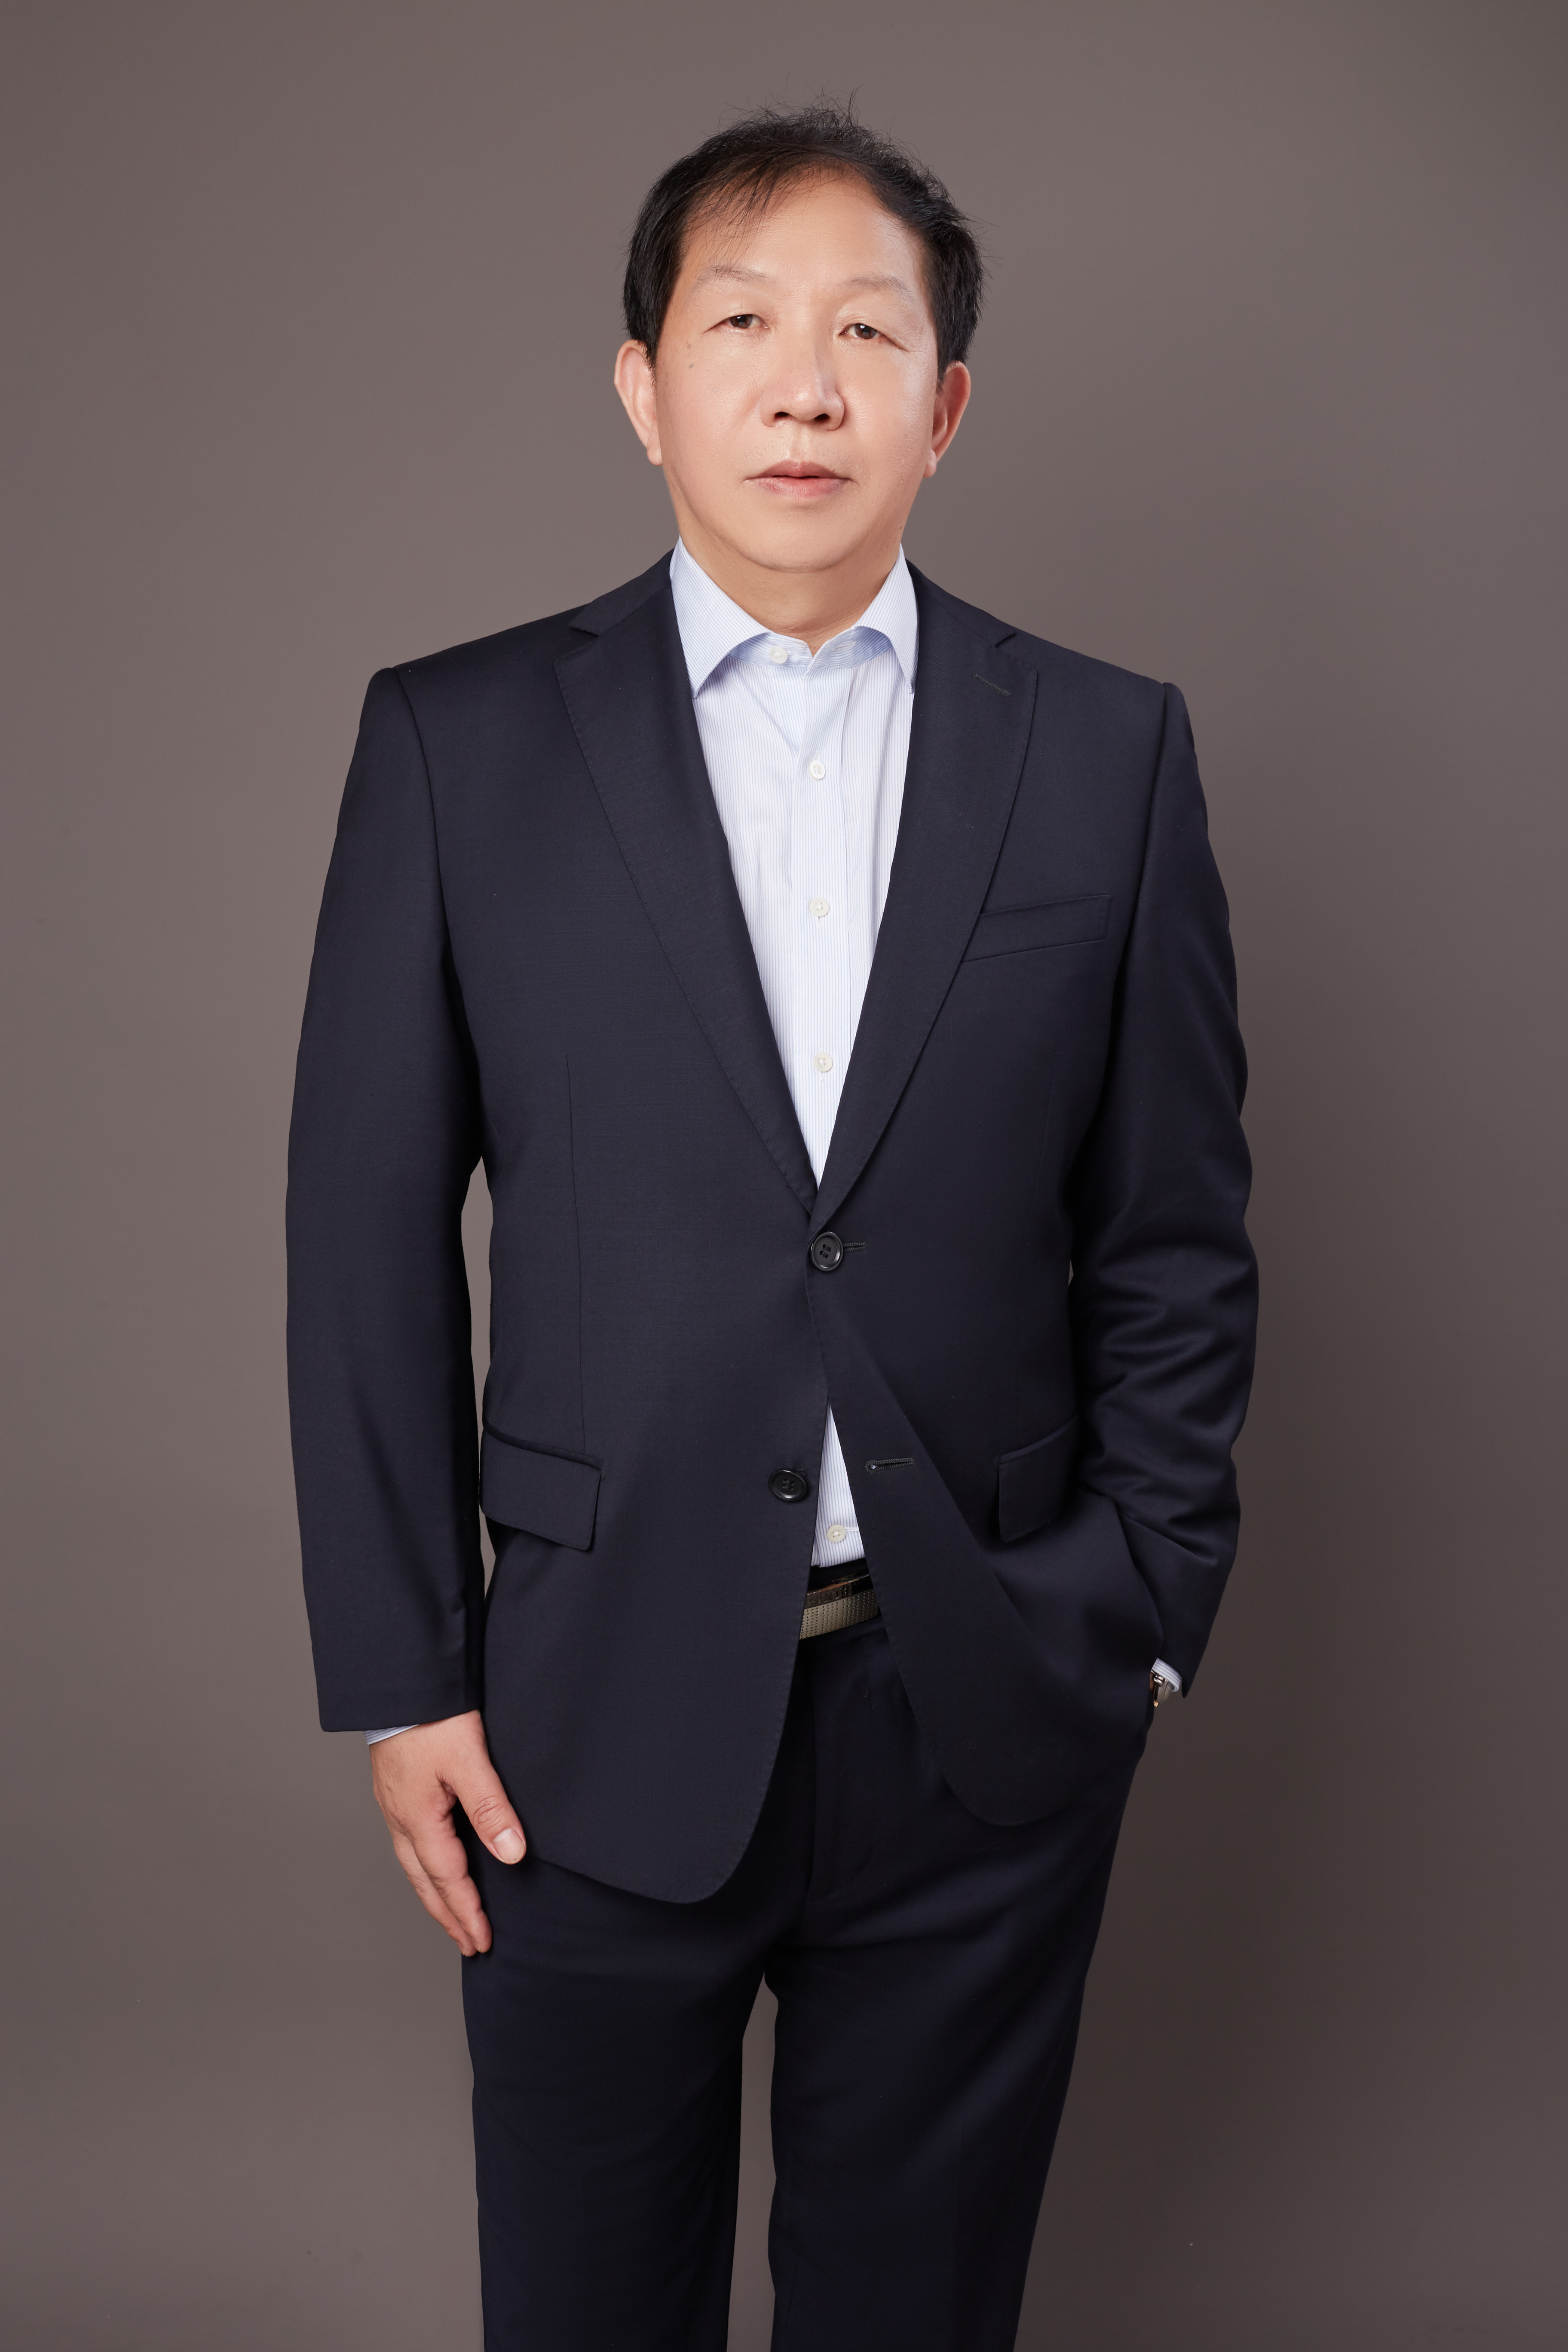 Shuiping Zhang Chief Intelligent Mining Expert 